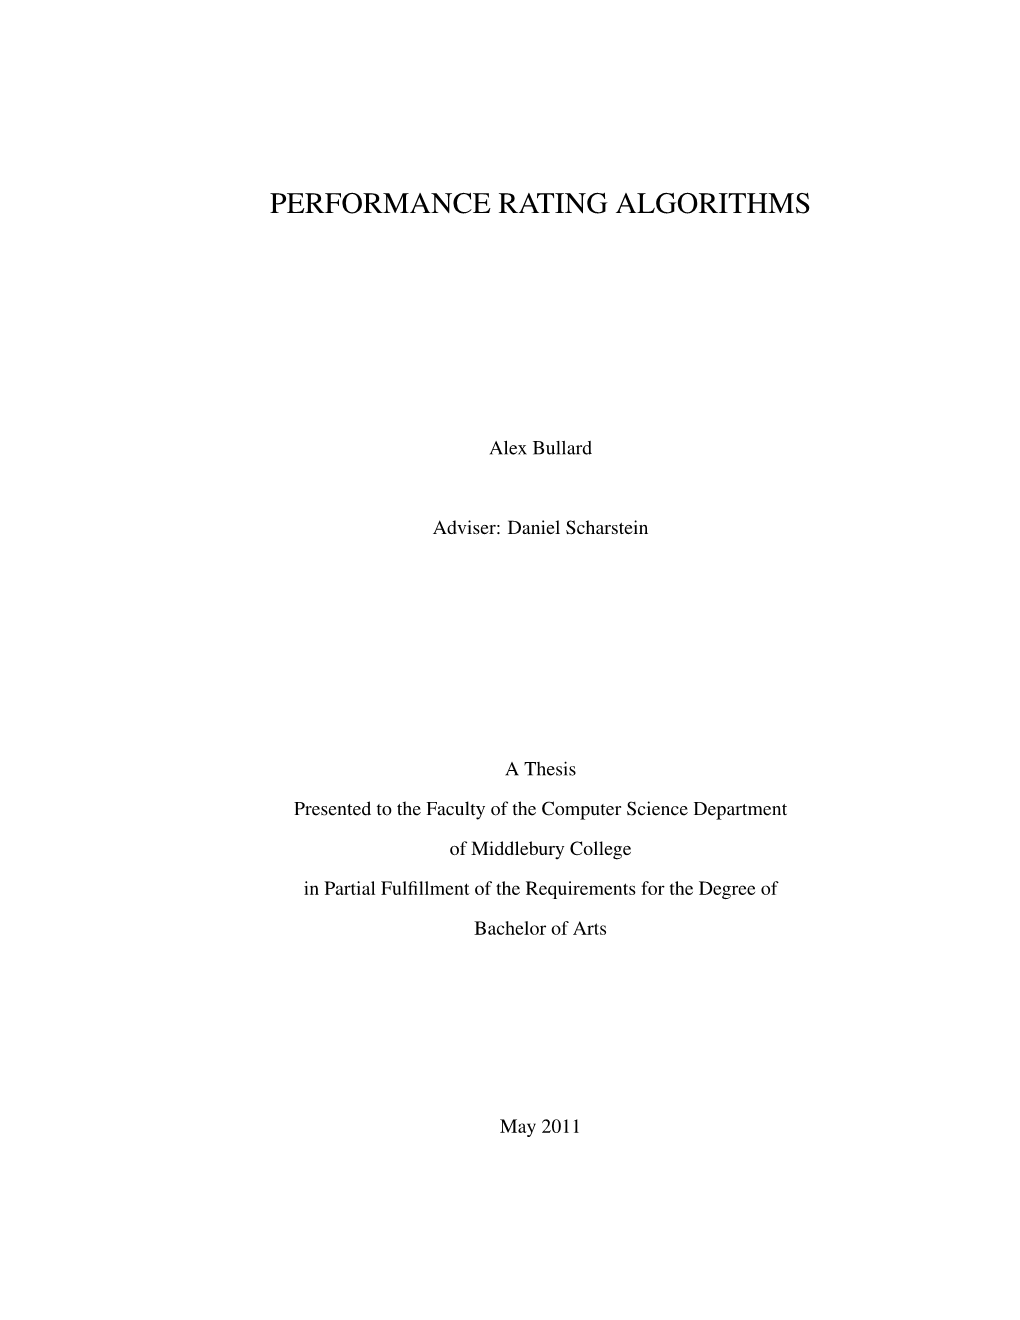 Performance Rating Algorithms